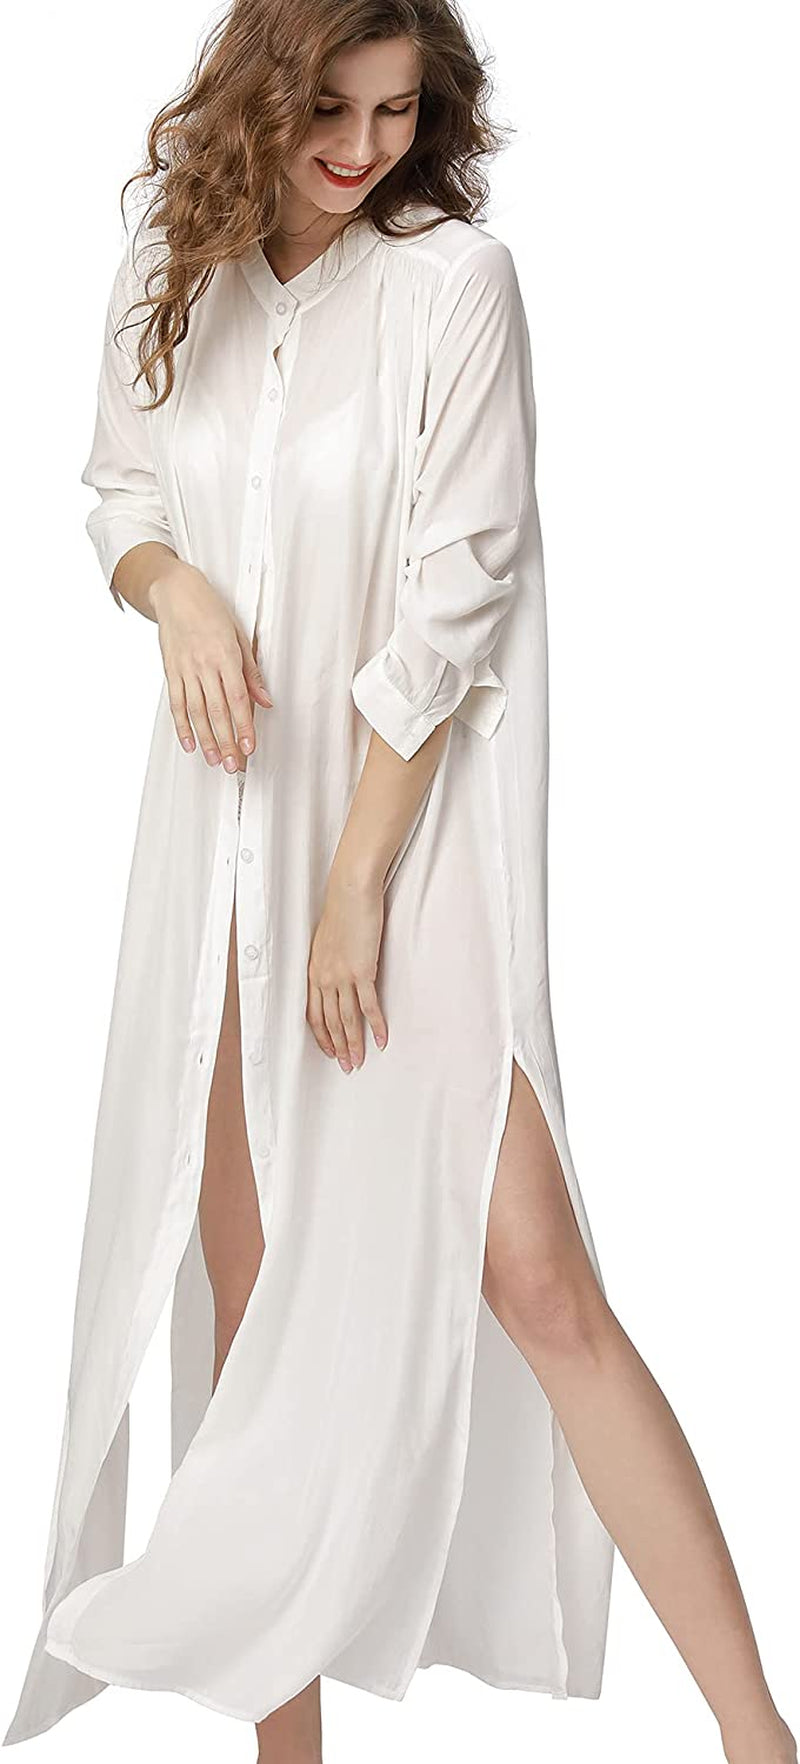 TOUSYEA Women'S Soft Nightgown Long Kimono Robes Swimsuit Cover Ups Maxi Beach Dress